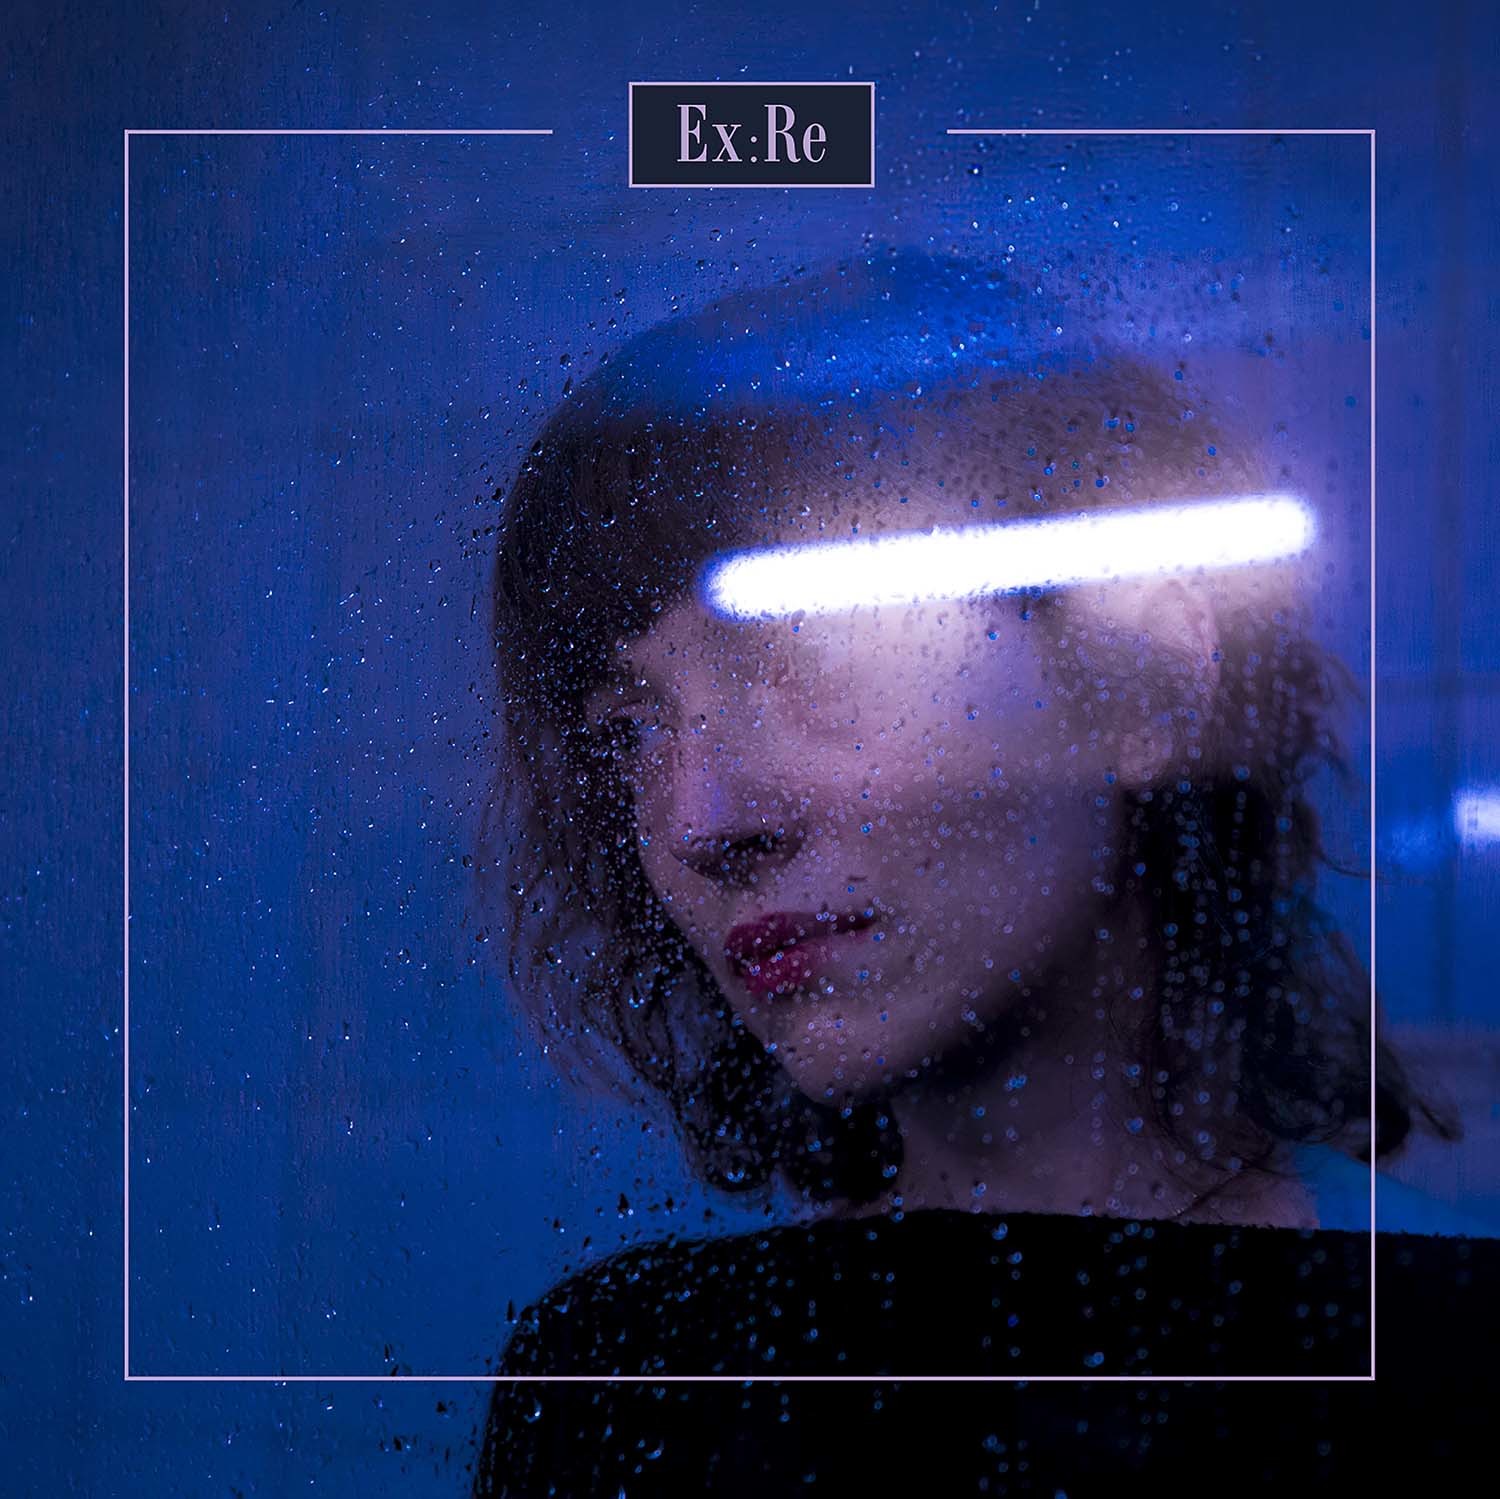 Daughter’s Elena Tonra announces solo album as Ex:Re